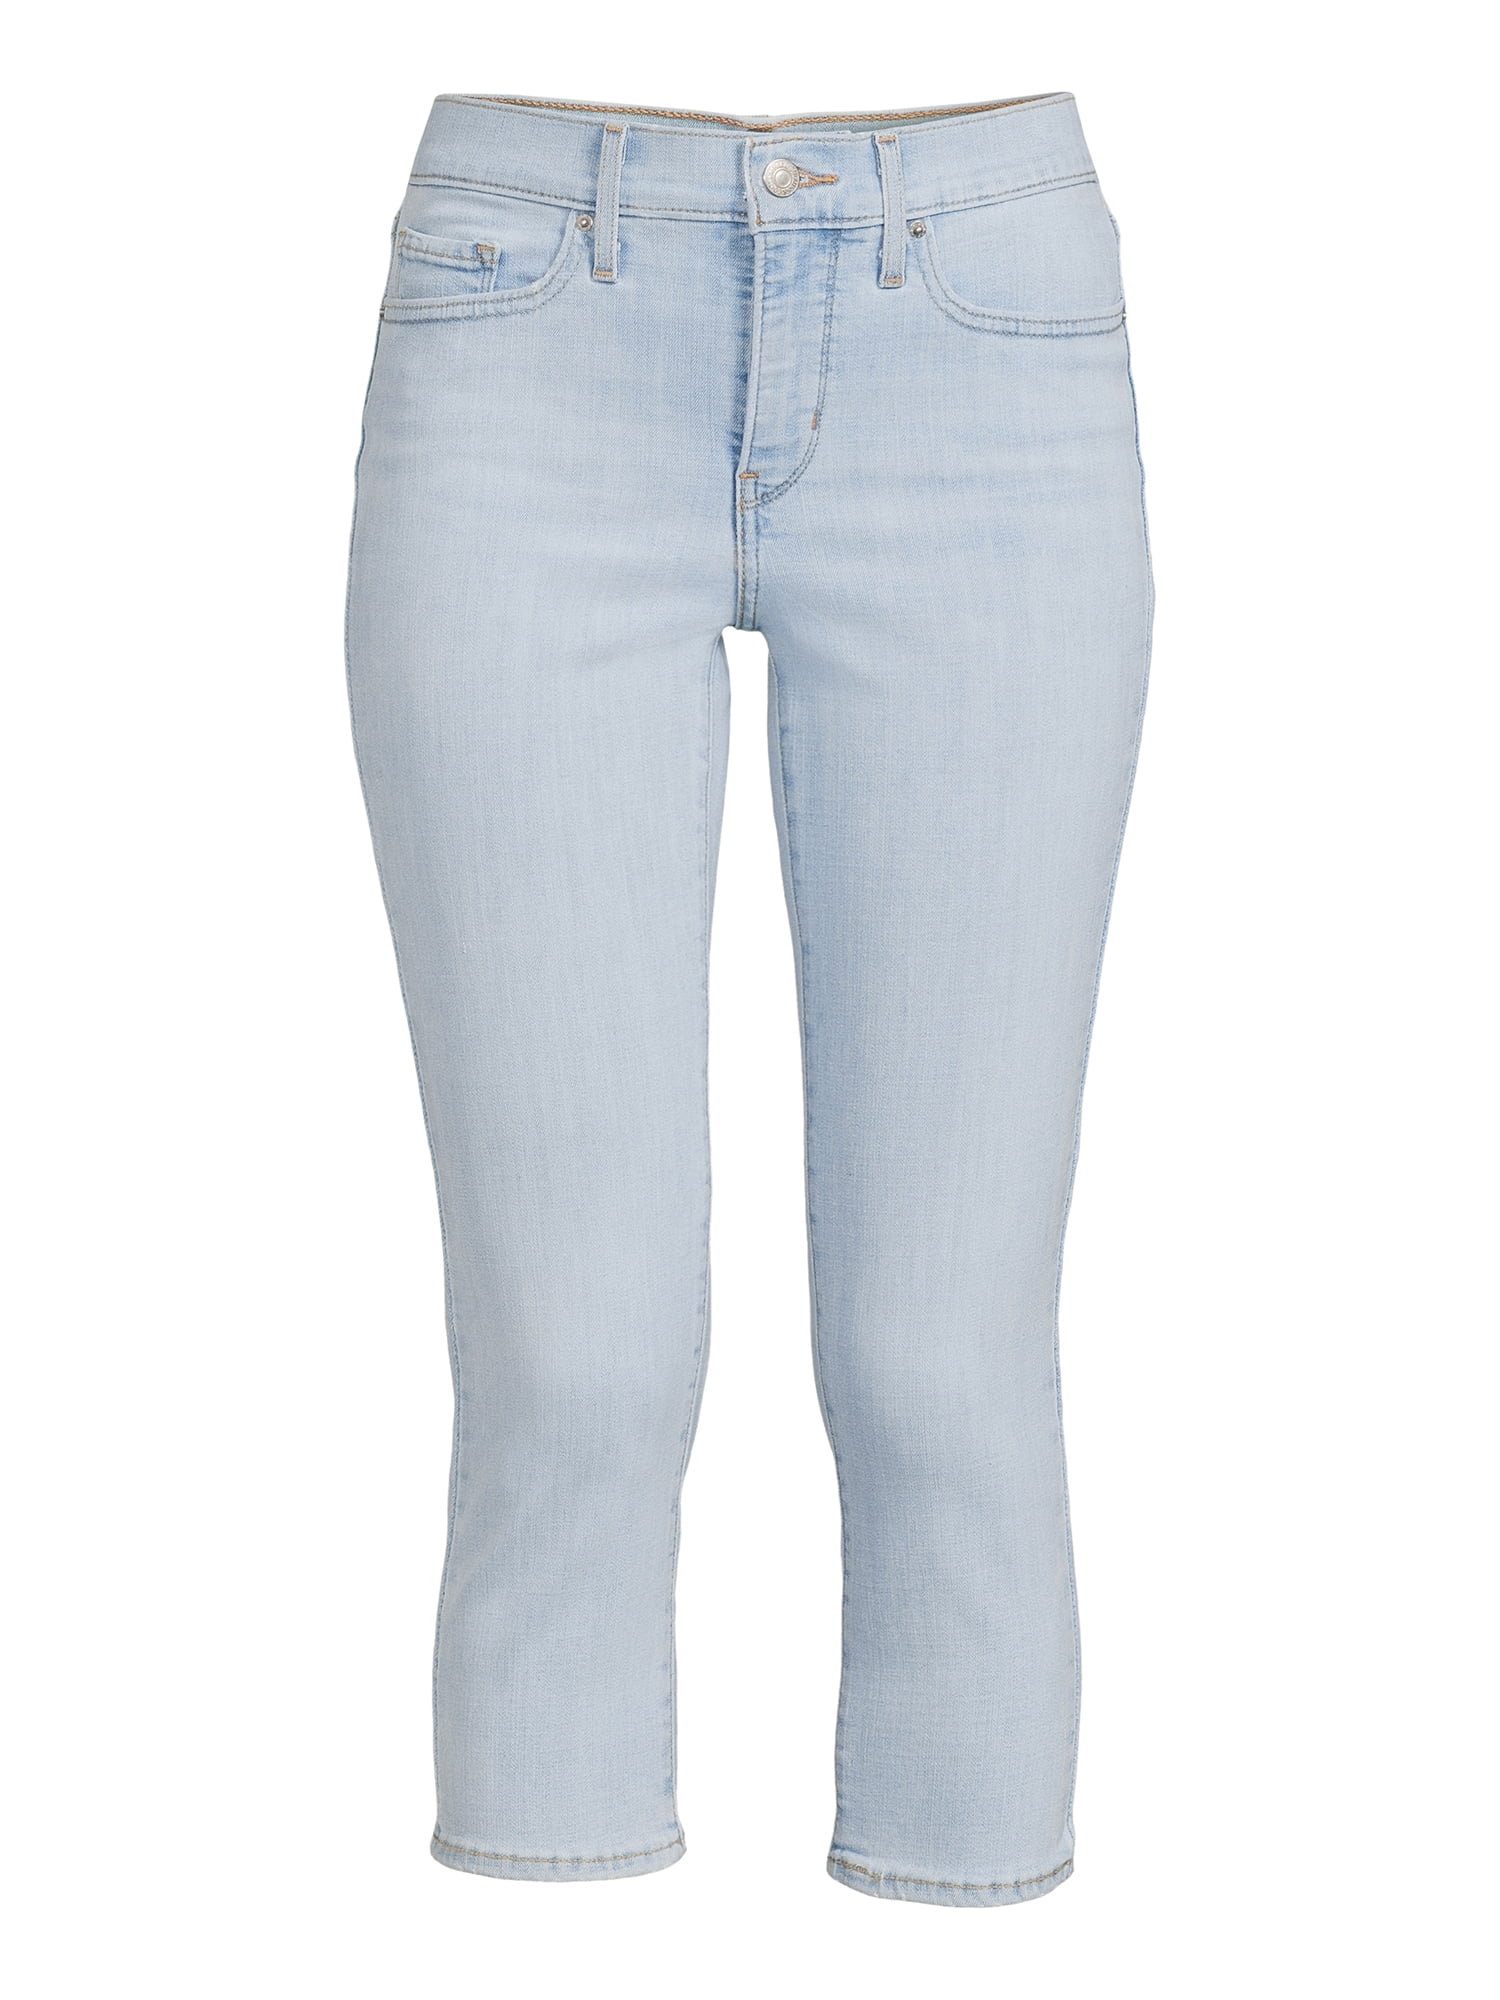 Levi's Original Women's 311 Shaping Skinny Capri Jeans 